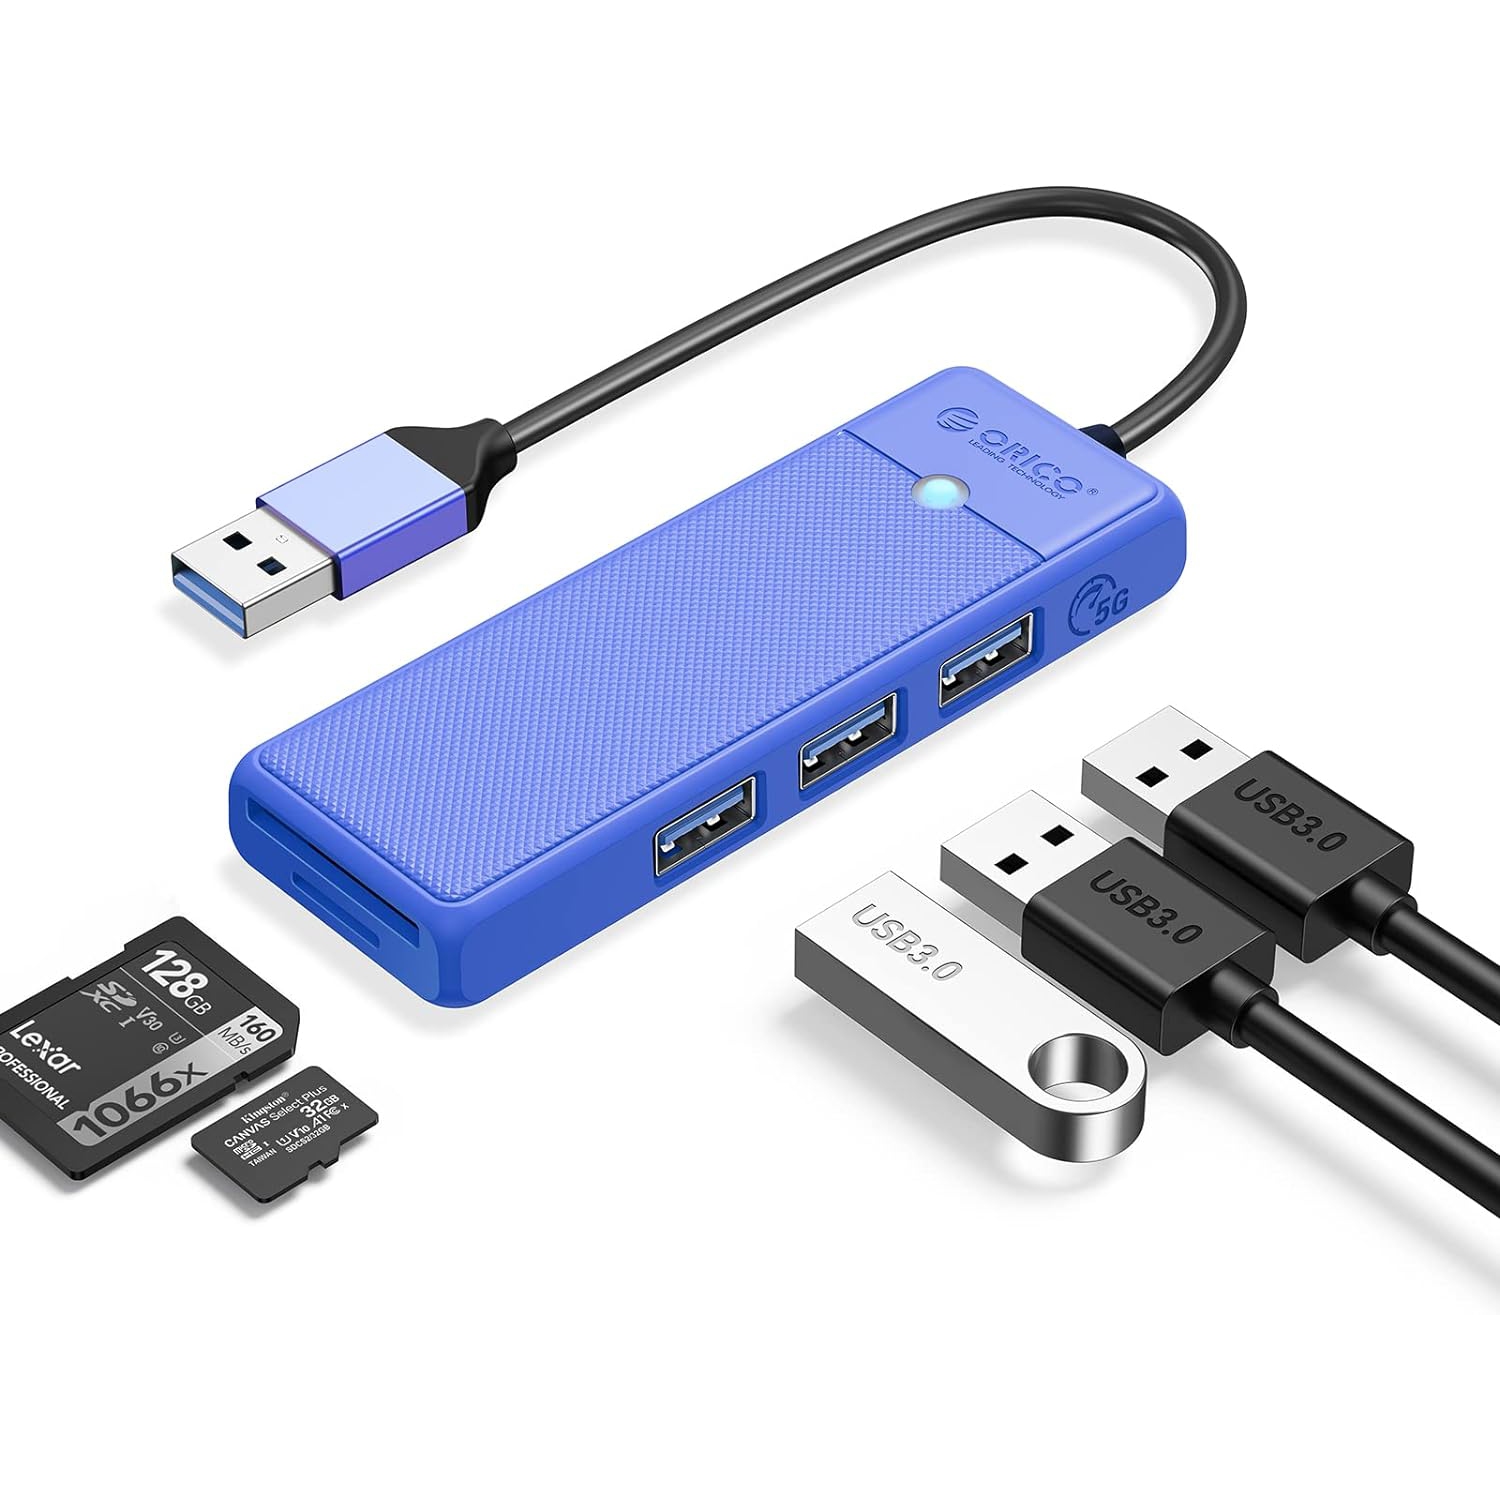 USB 3.0 Hub, USB Hub with SD/TF Card Reader, 3 USB 3.0 Ports,USB Splitter USB Expander for Laptop, Xbox, Flash